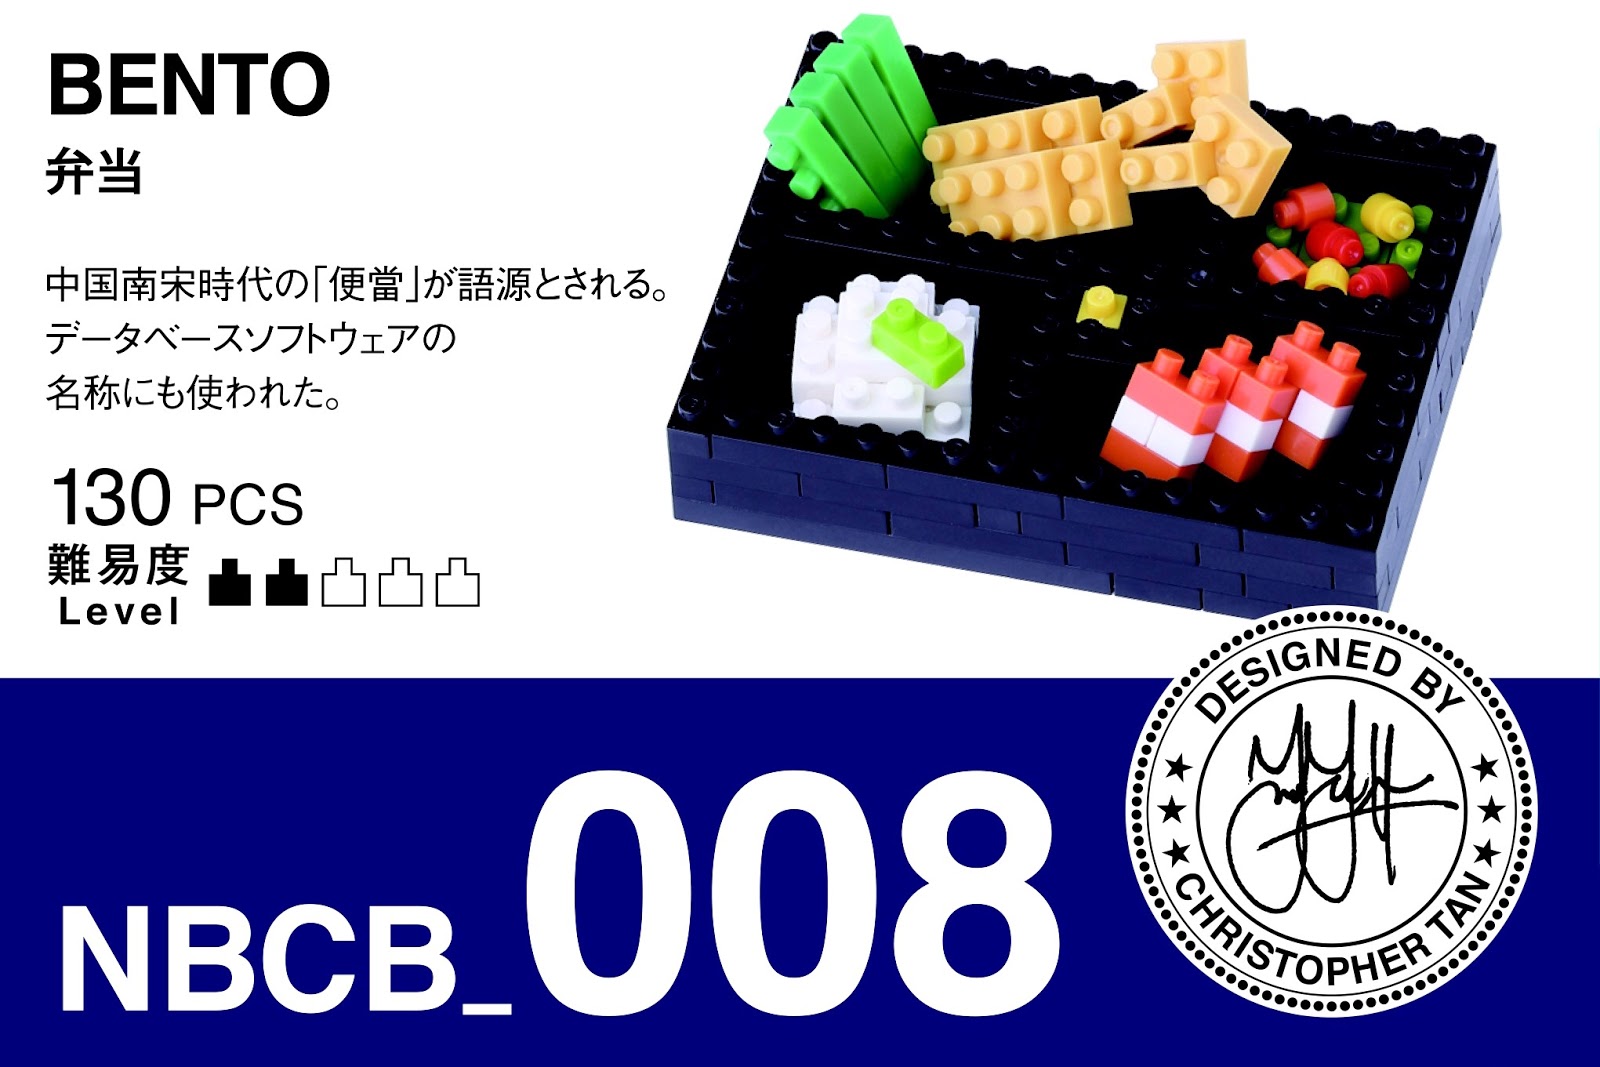 nanoblock NBCB_008 Bento designed by Christopher Tan